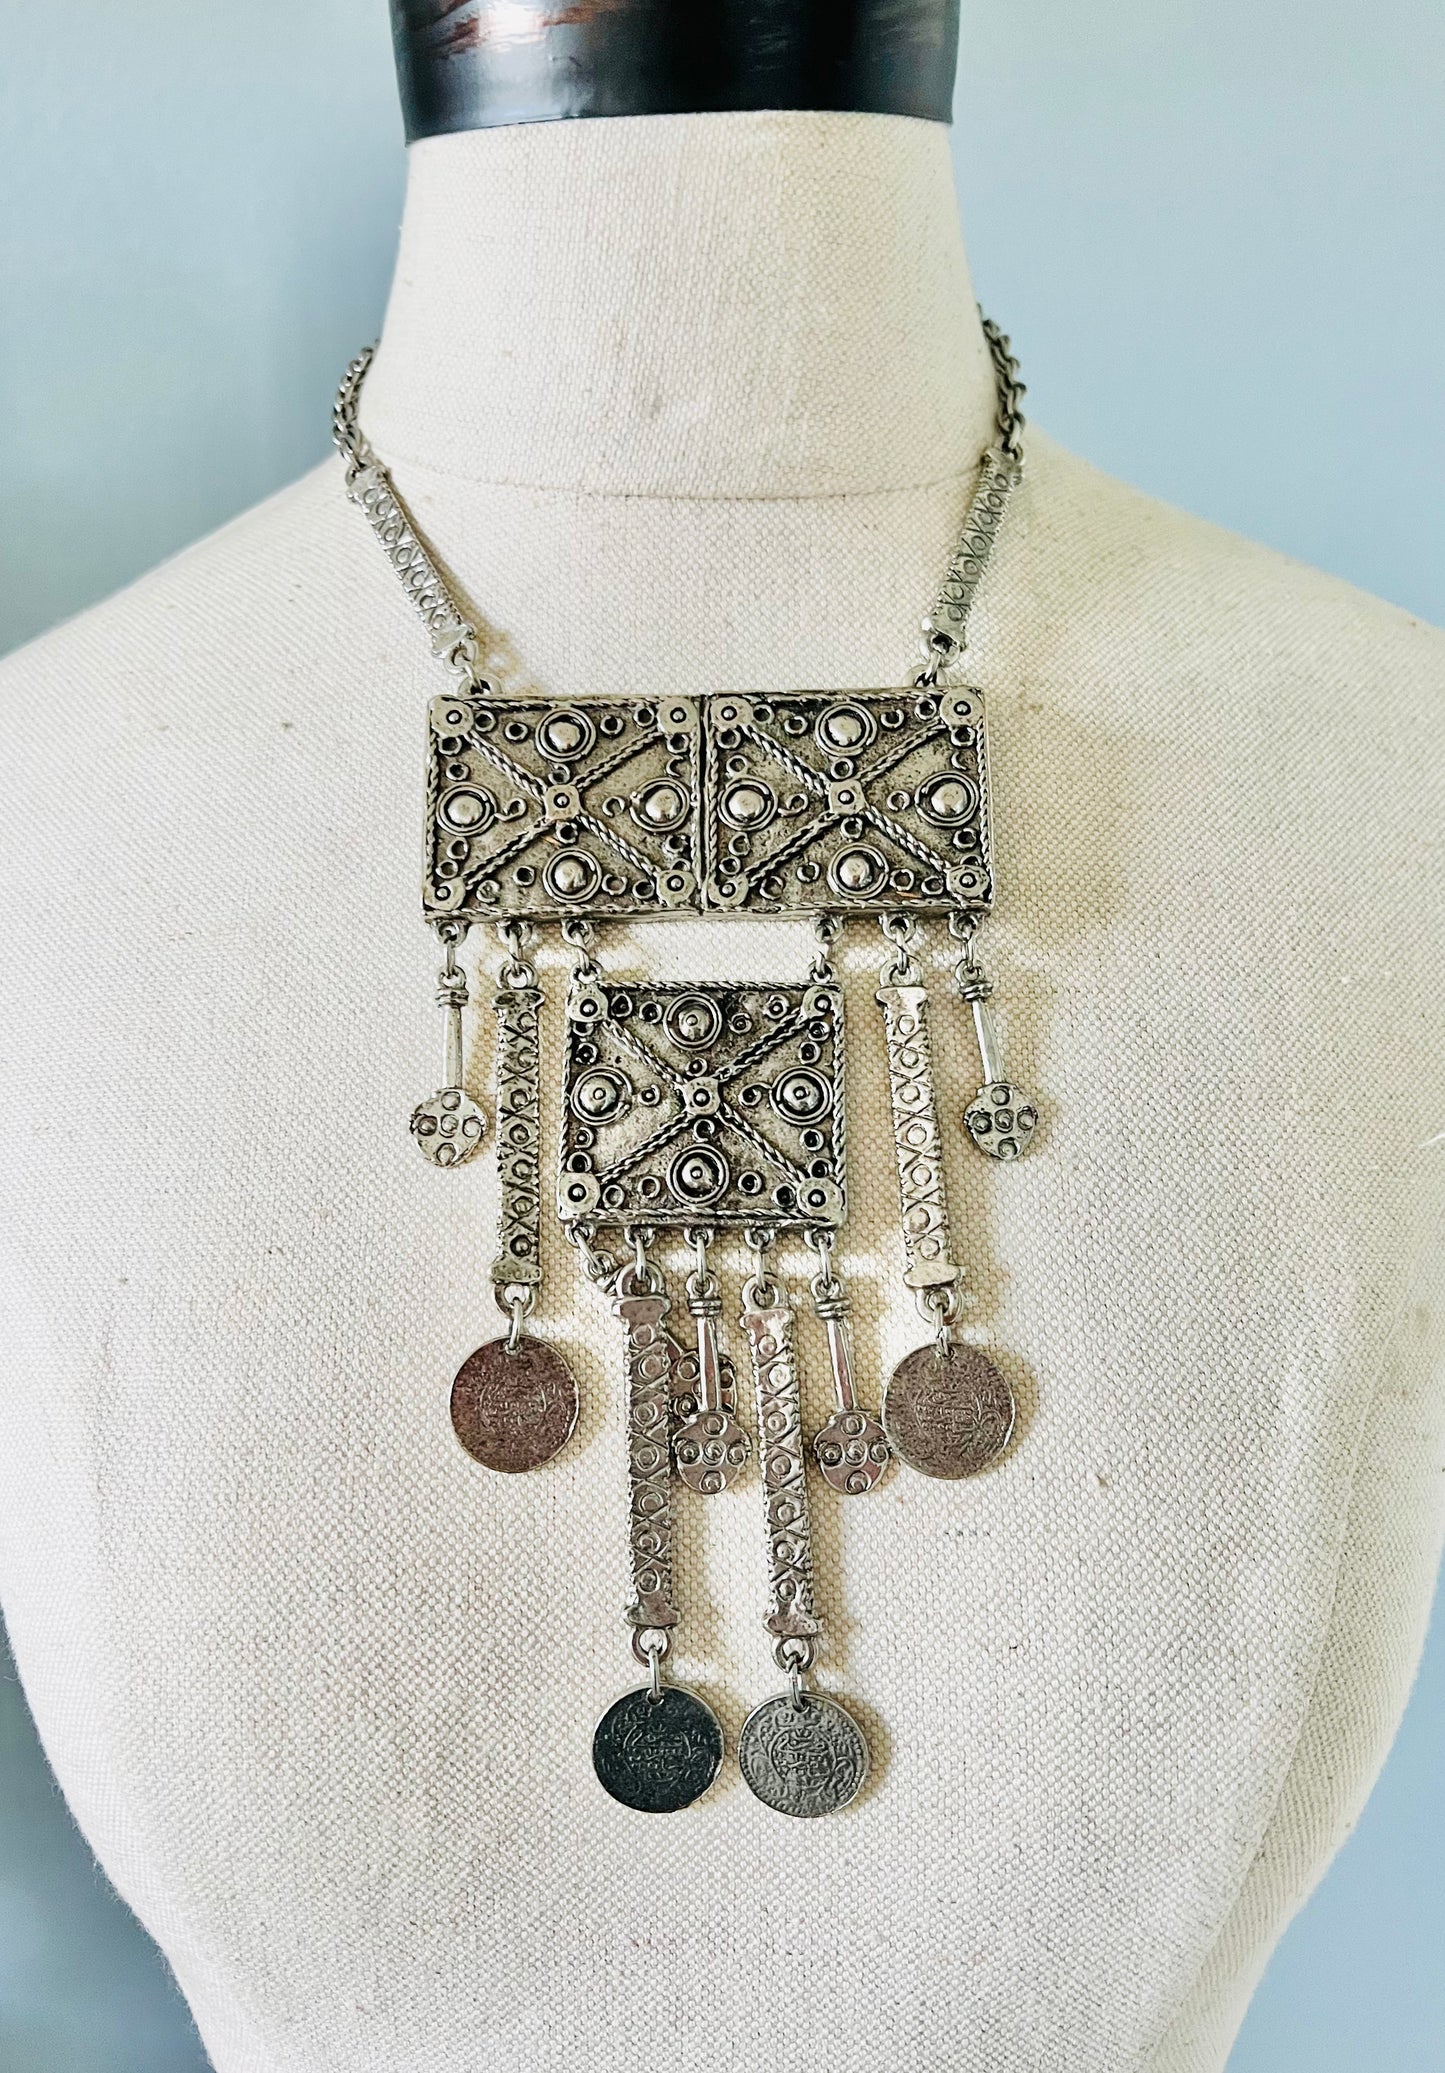 Vintage 1970s Etruscan Revival Silver Statement Necklace